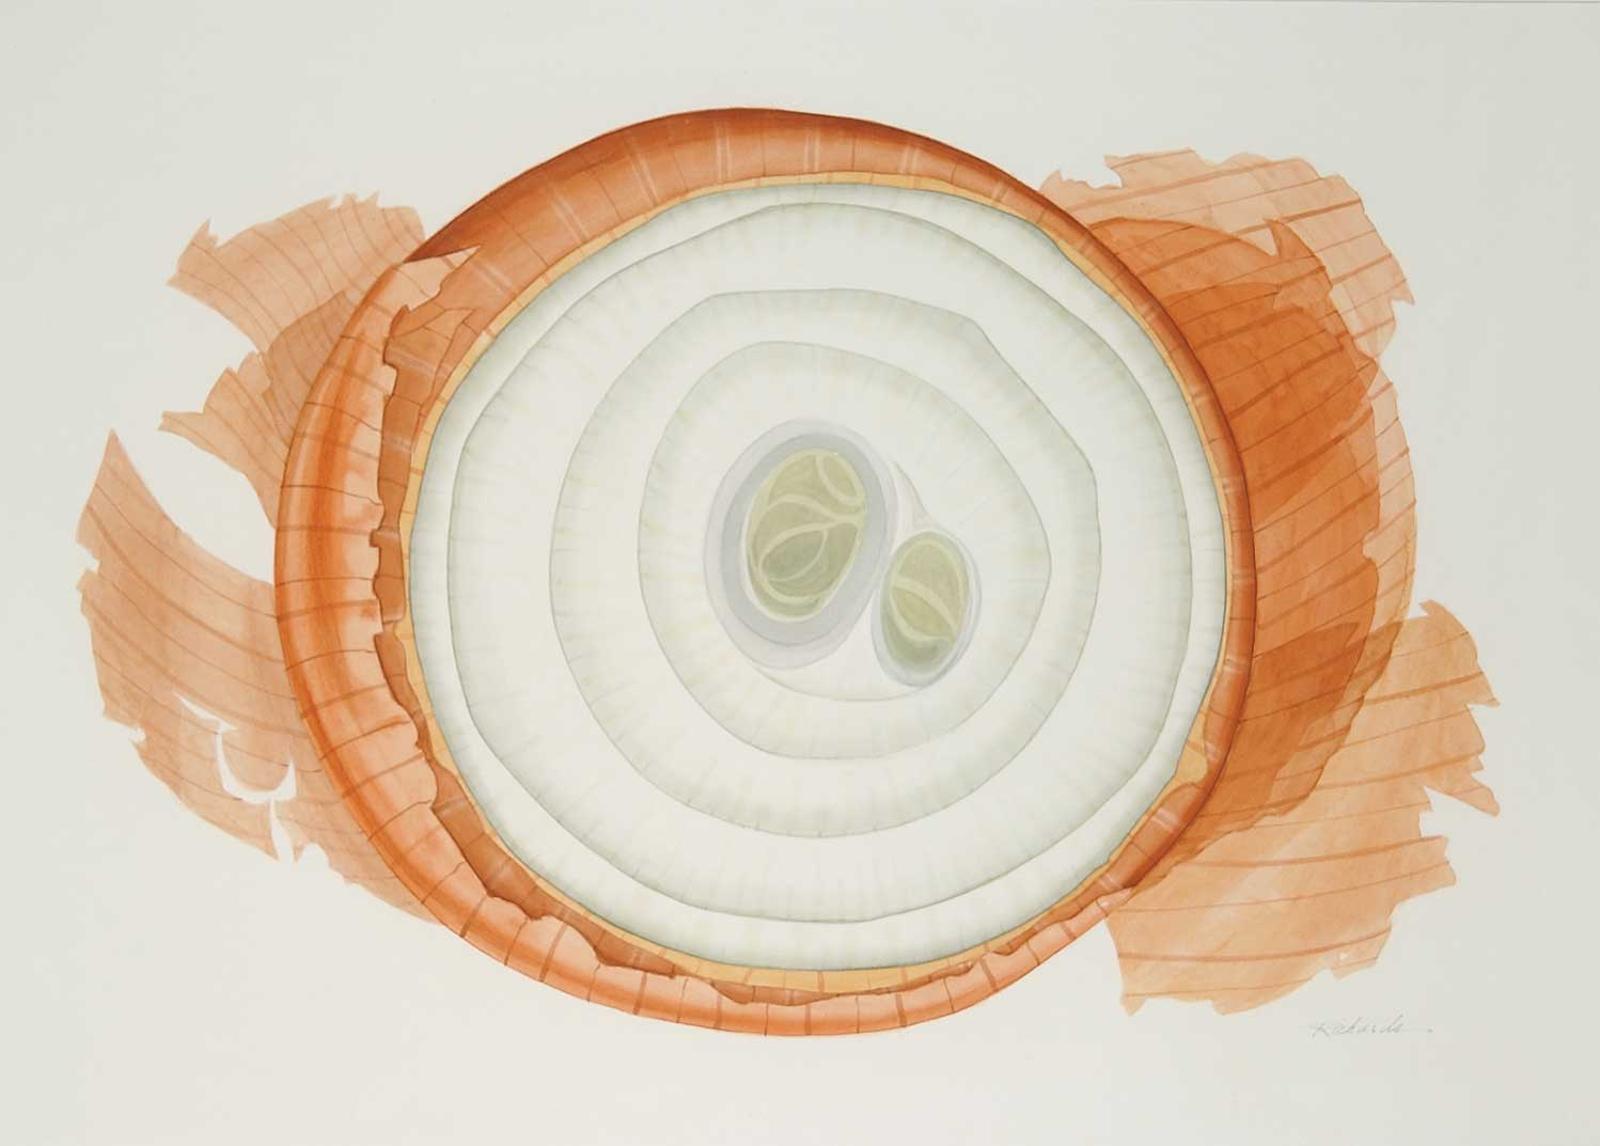 Tom Richards - Untitled - Onion